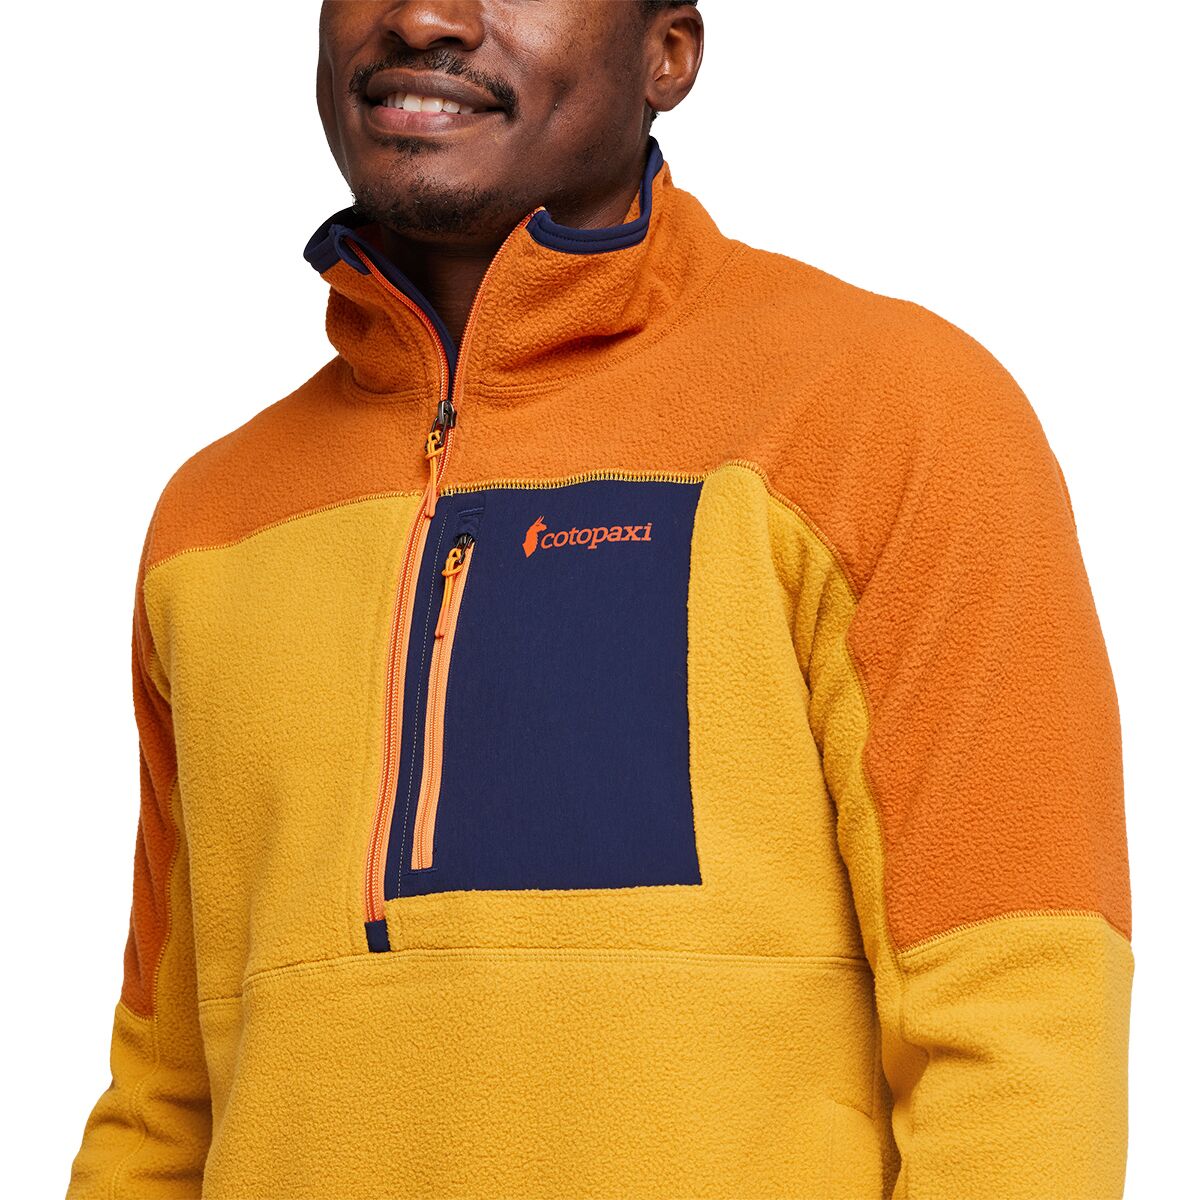 Cotopaxi Abrazo Half-Zip Fleece Jacket - Men's Maritime & Birch, XL